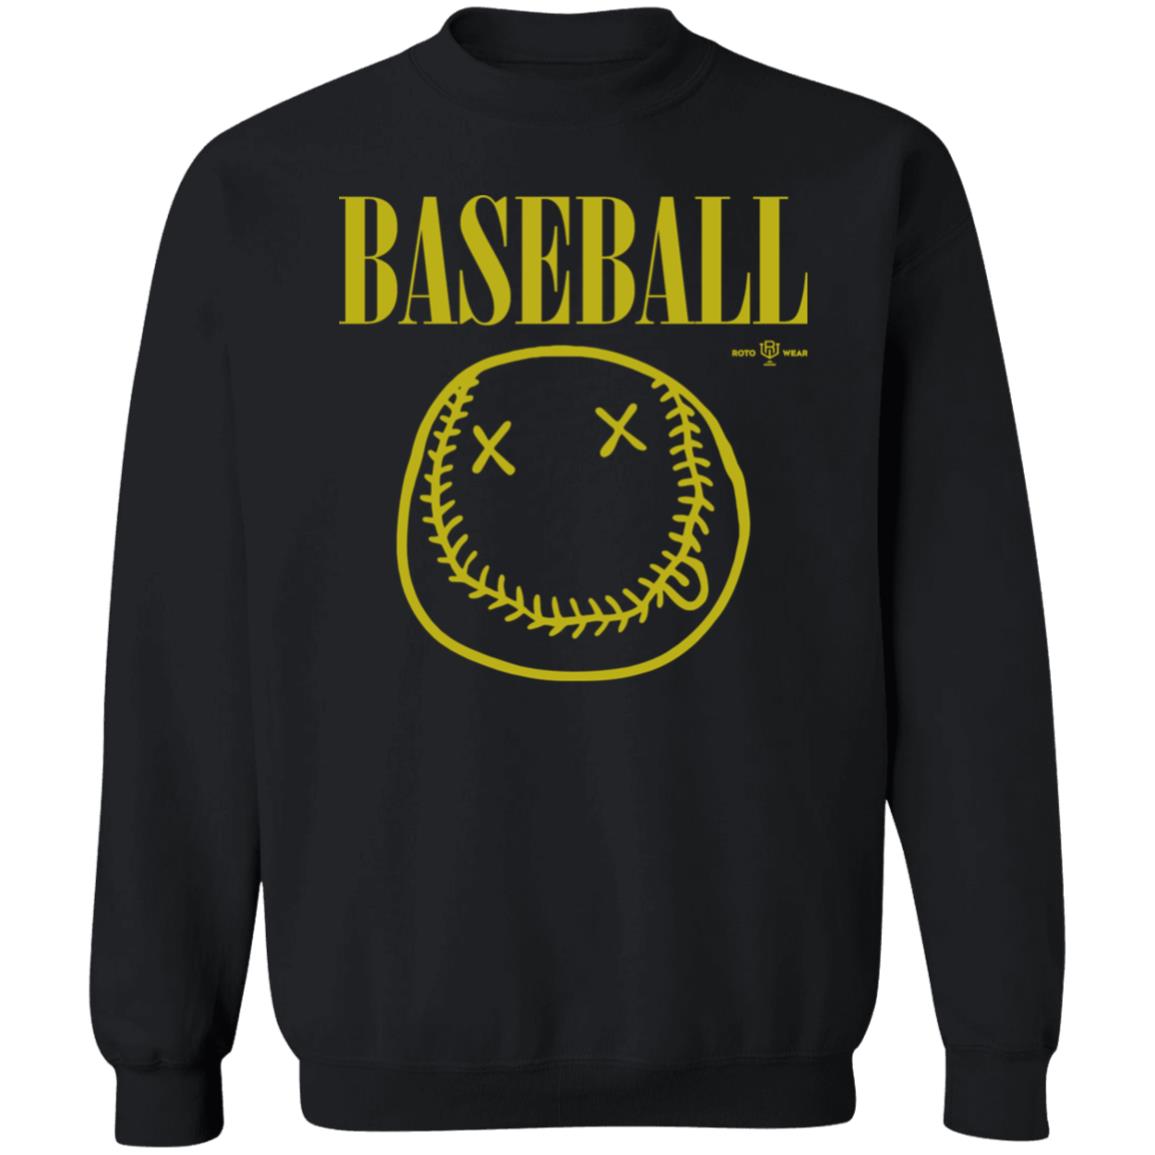 Baseball Nirvana Shirt 1